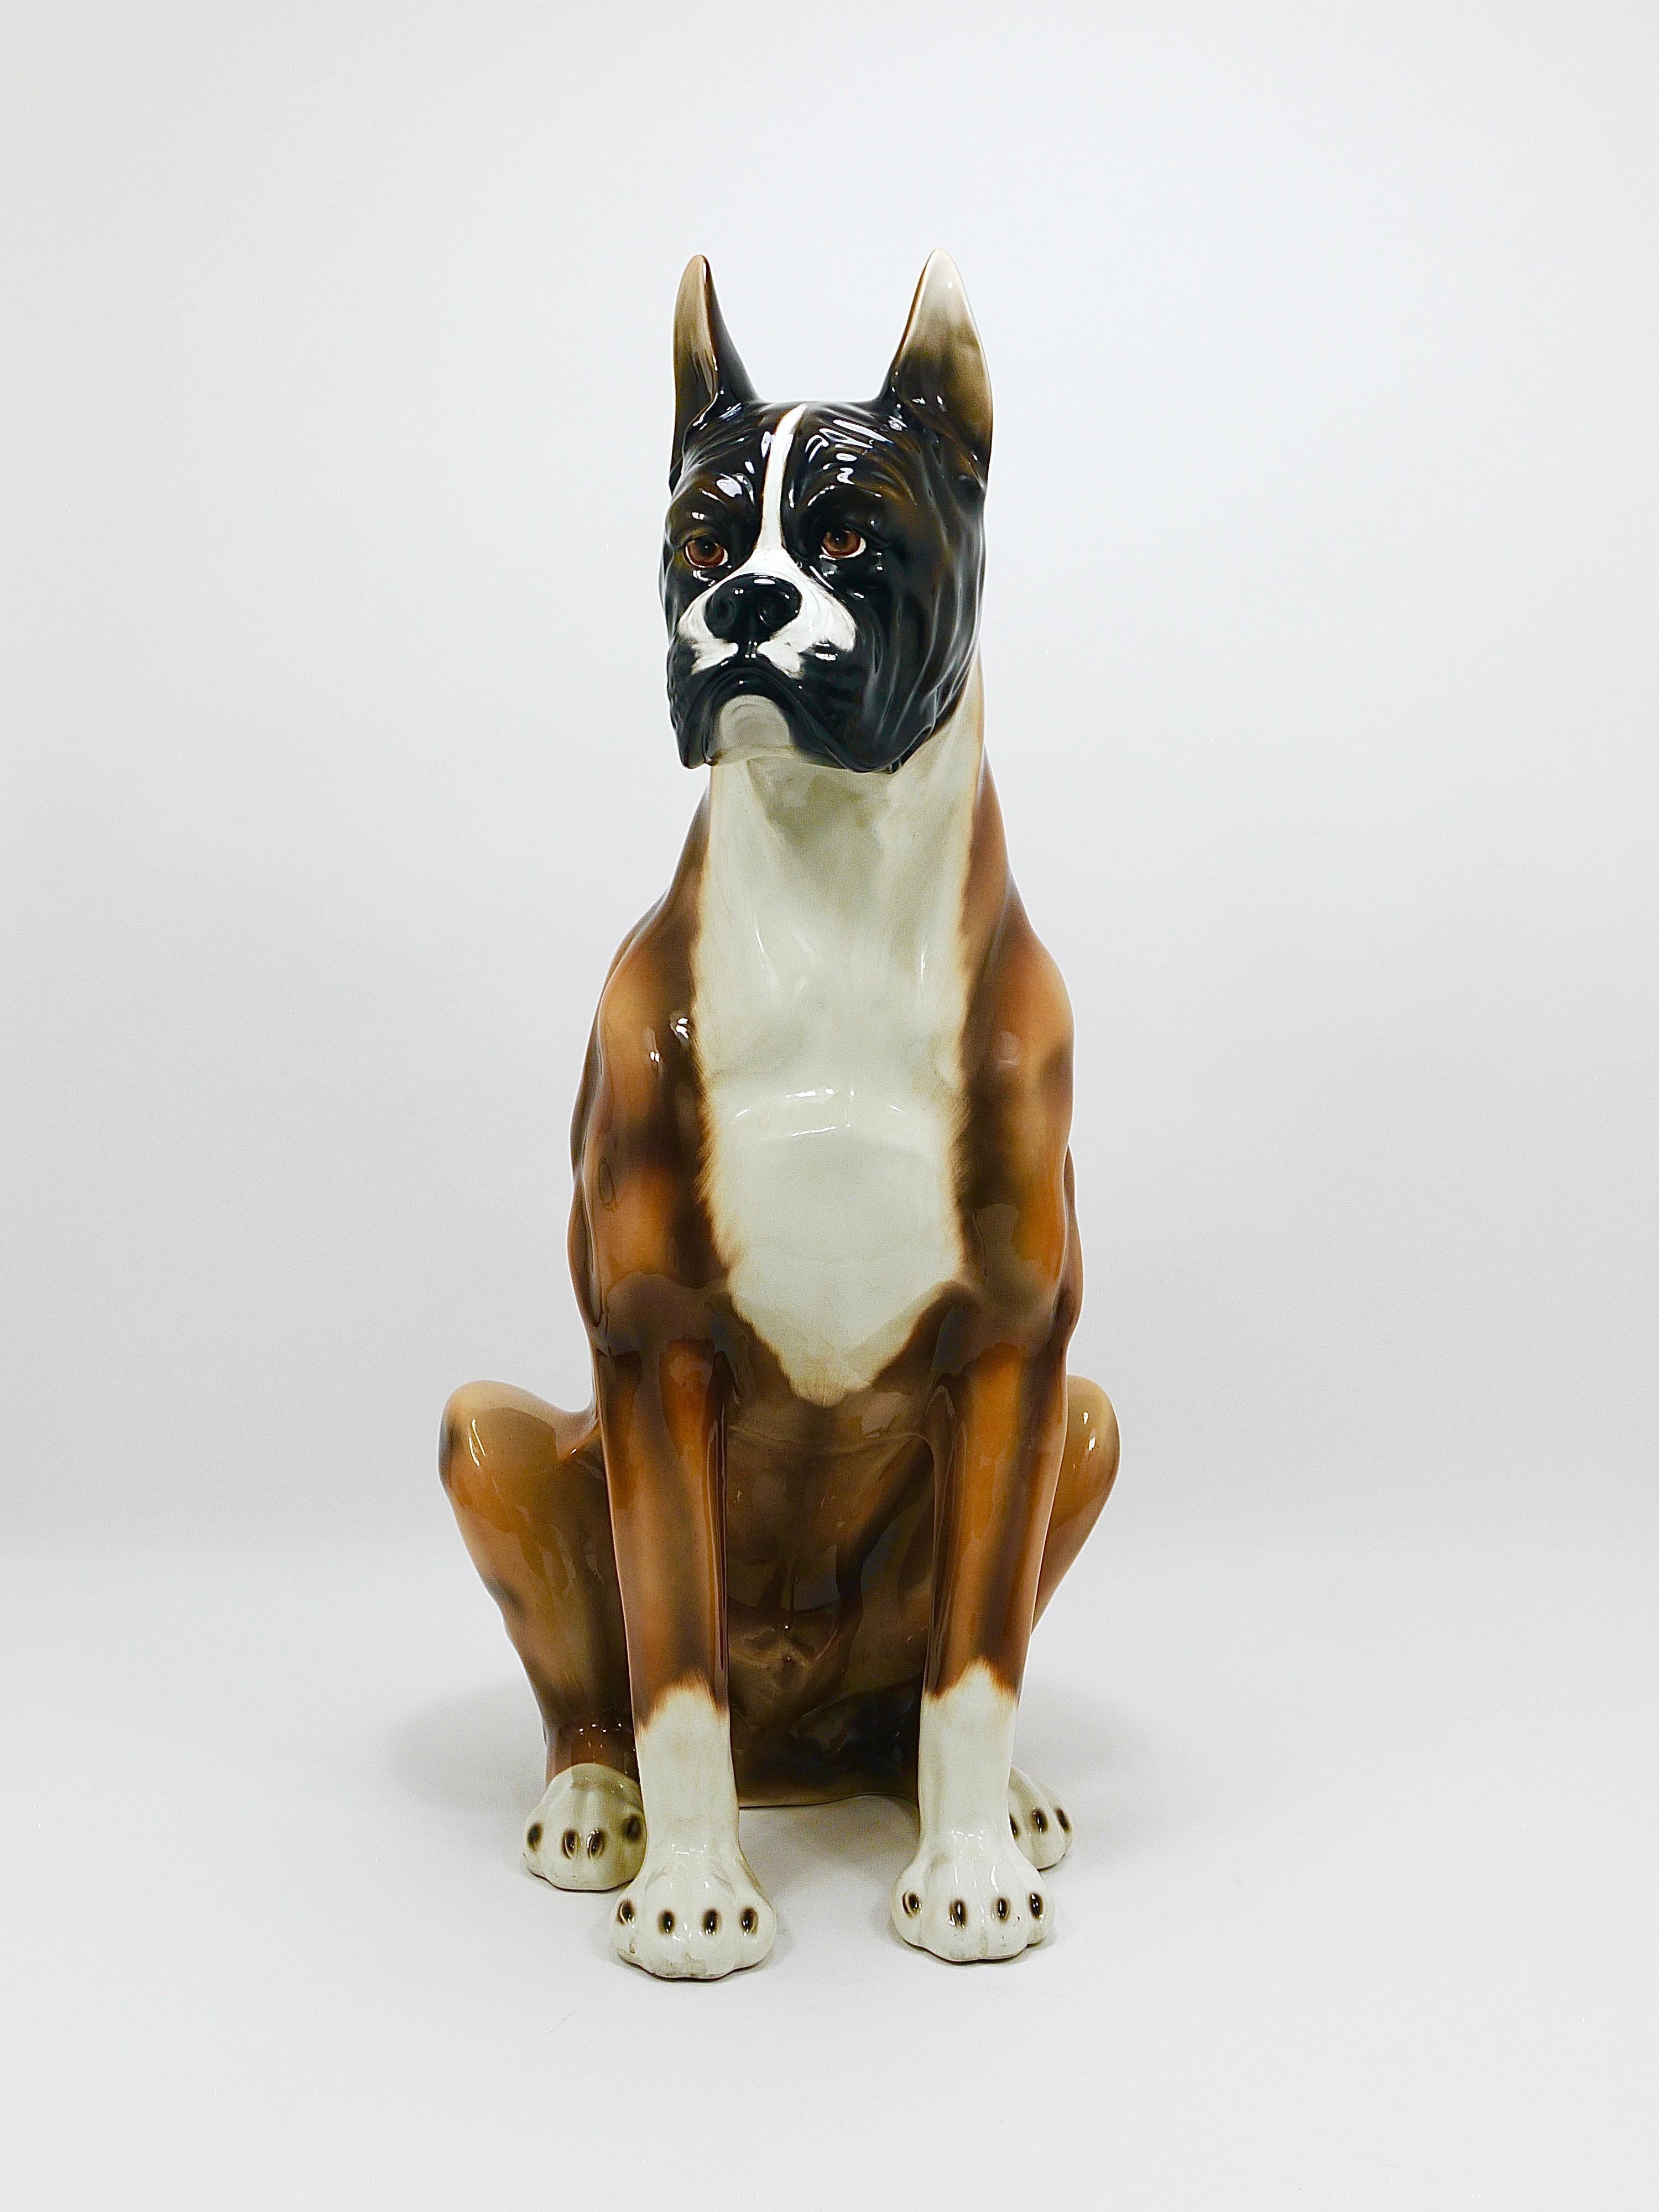 Boxer Dog Life-Size Majolica Statue Sculpture, Glazed Ceramic, Italy, 1970s For Sale 6